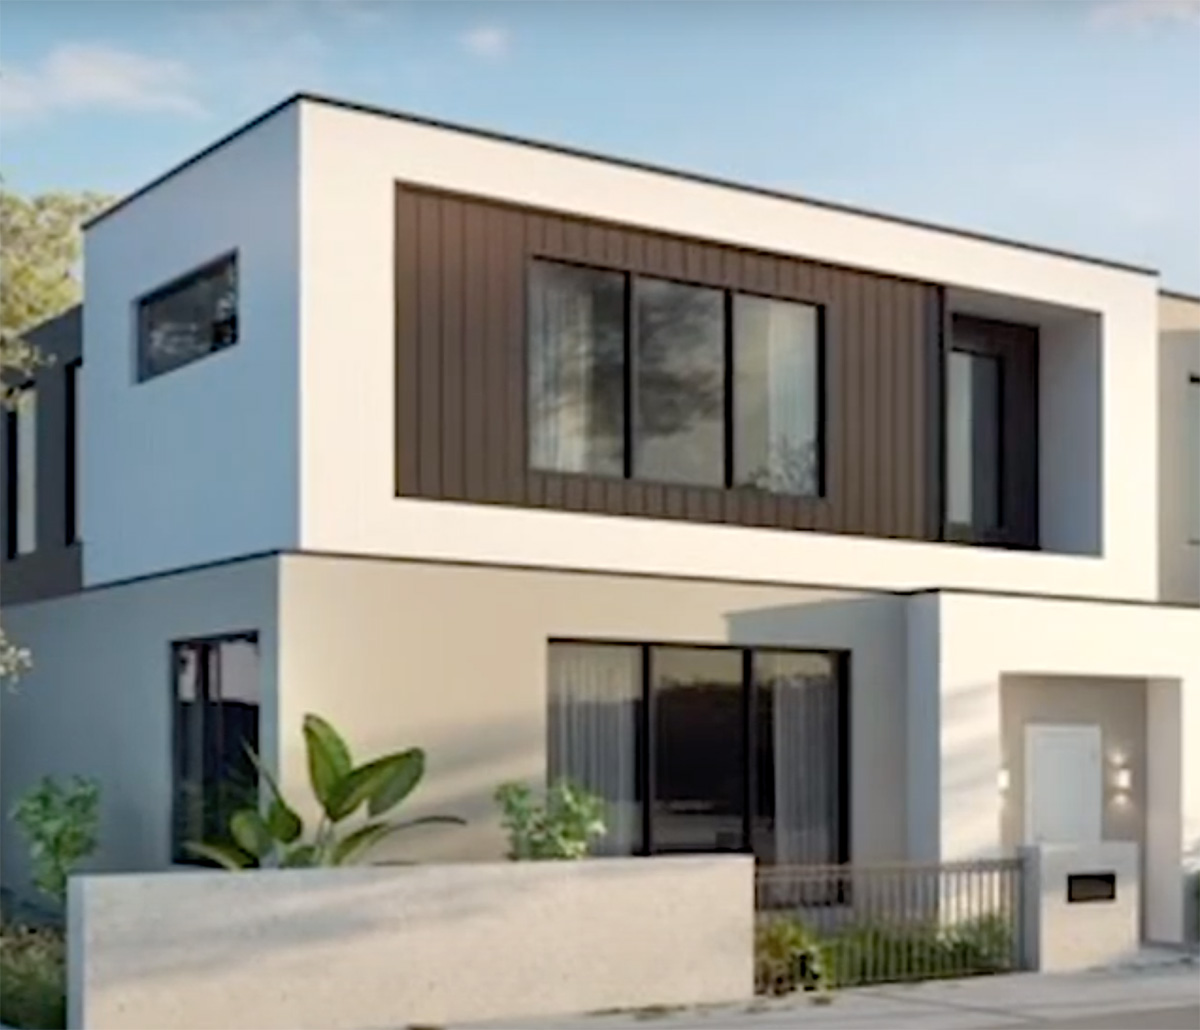 MiTek 3D Modeling Service - 3D render of a two story modern home